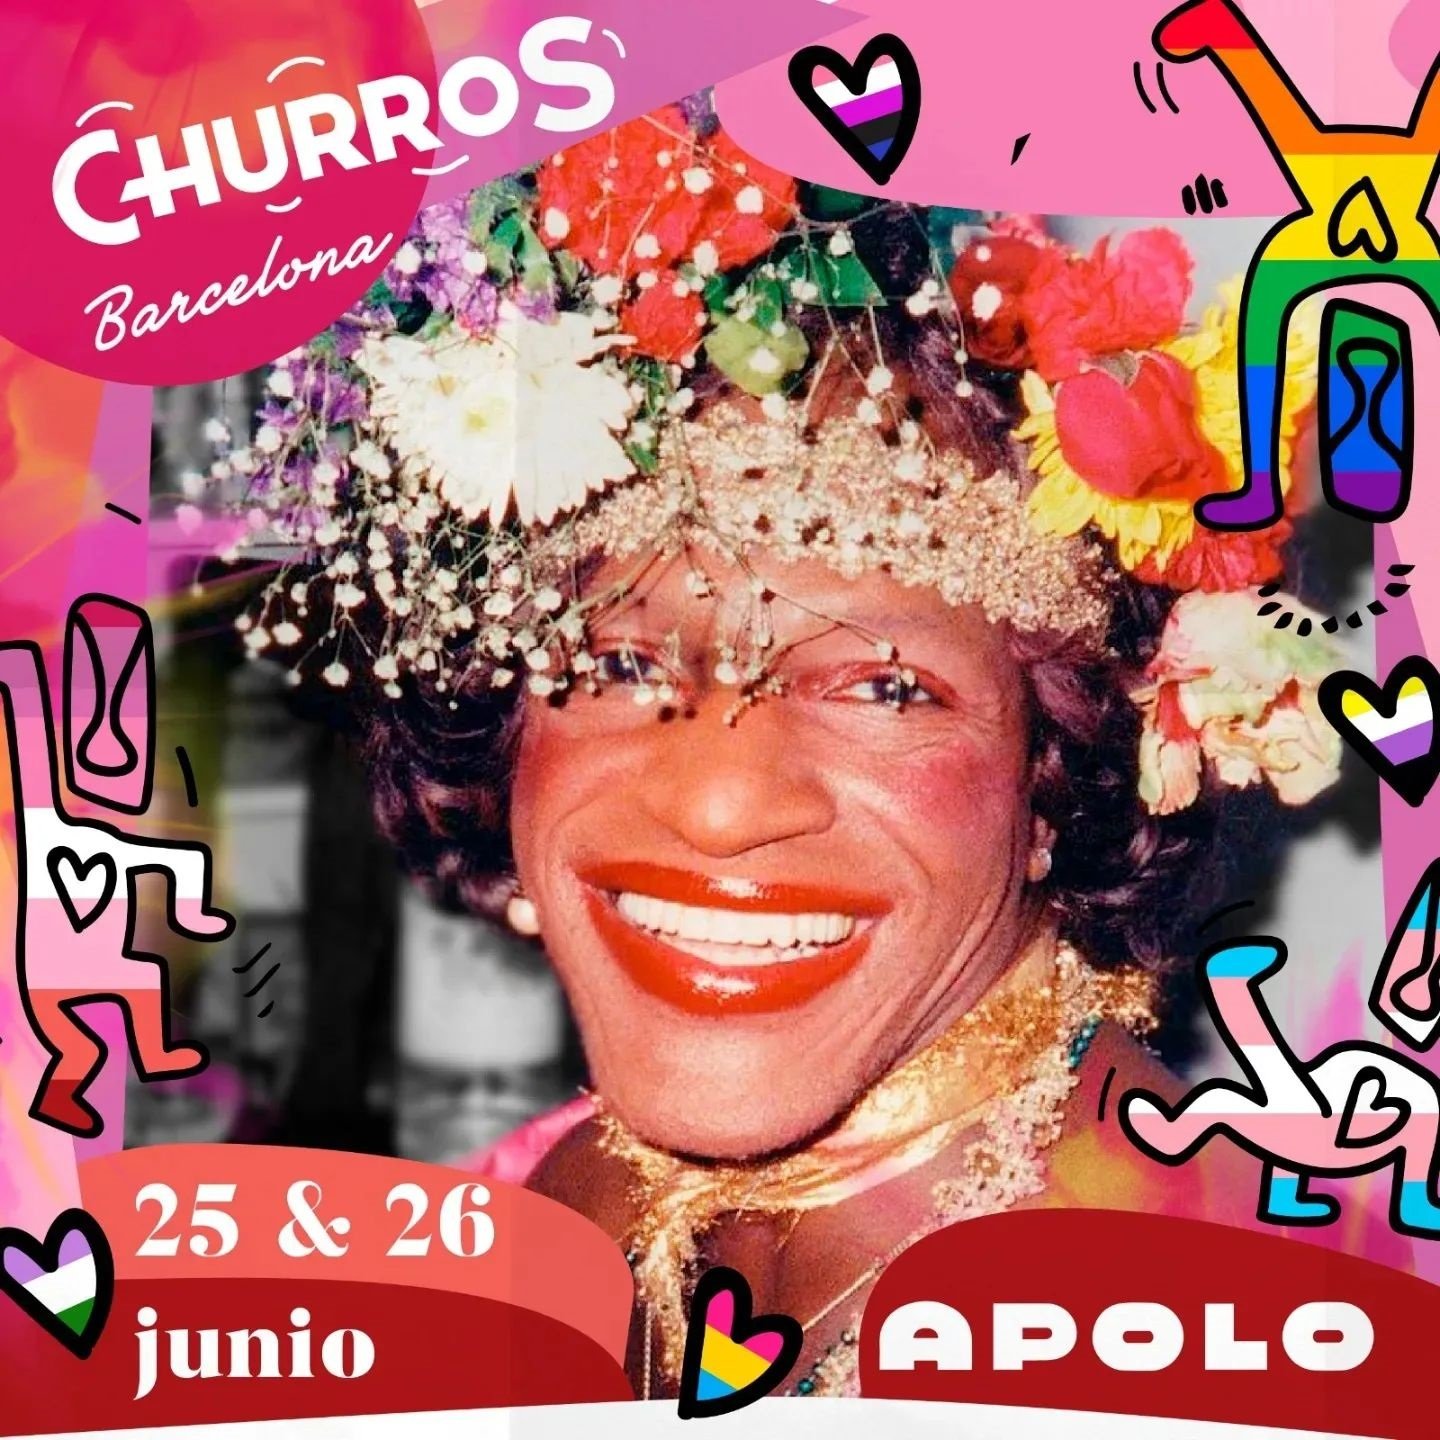 Churros con chocolate fiesta Sala Apolo Pride Barcelona 2022